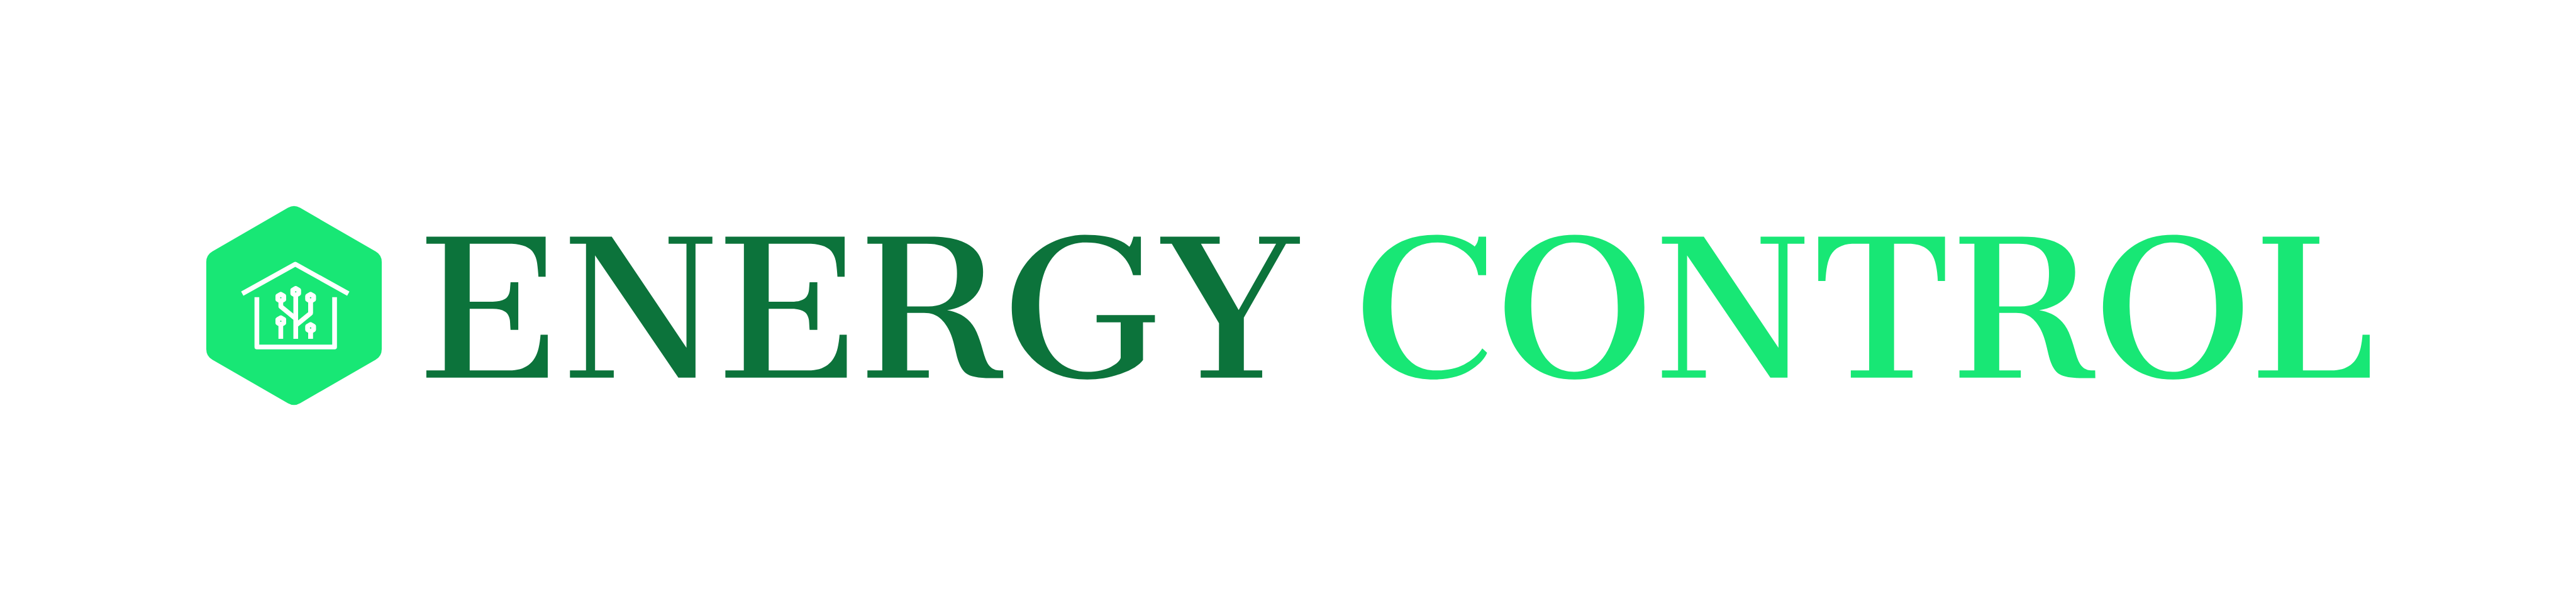 Energy-Control logo